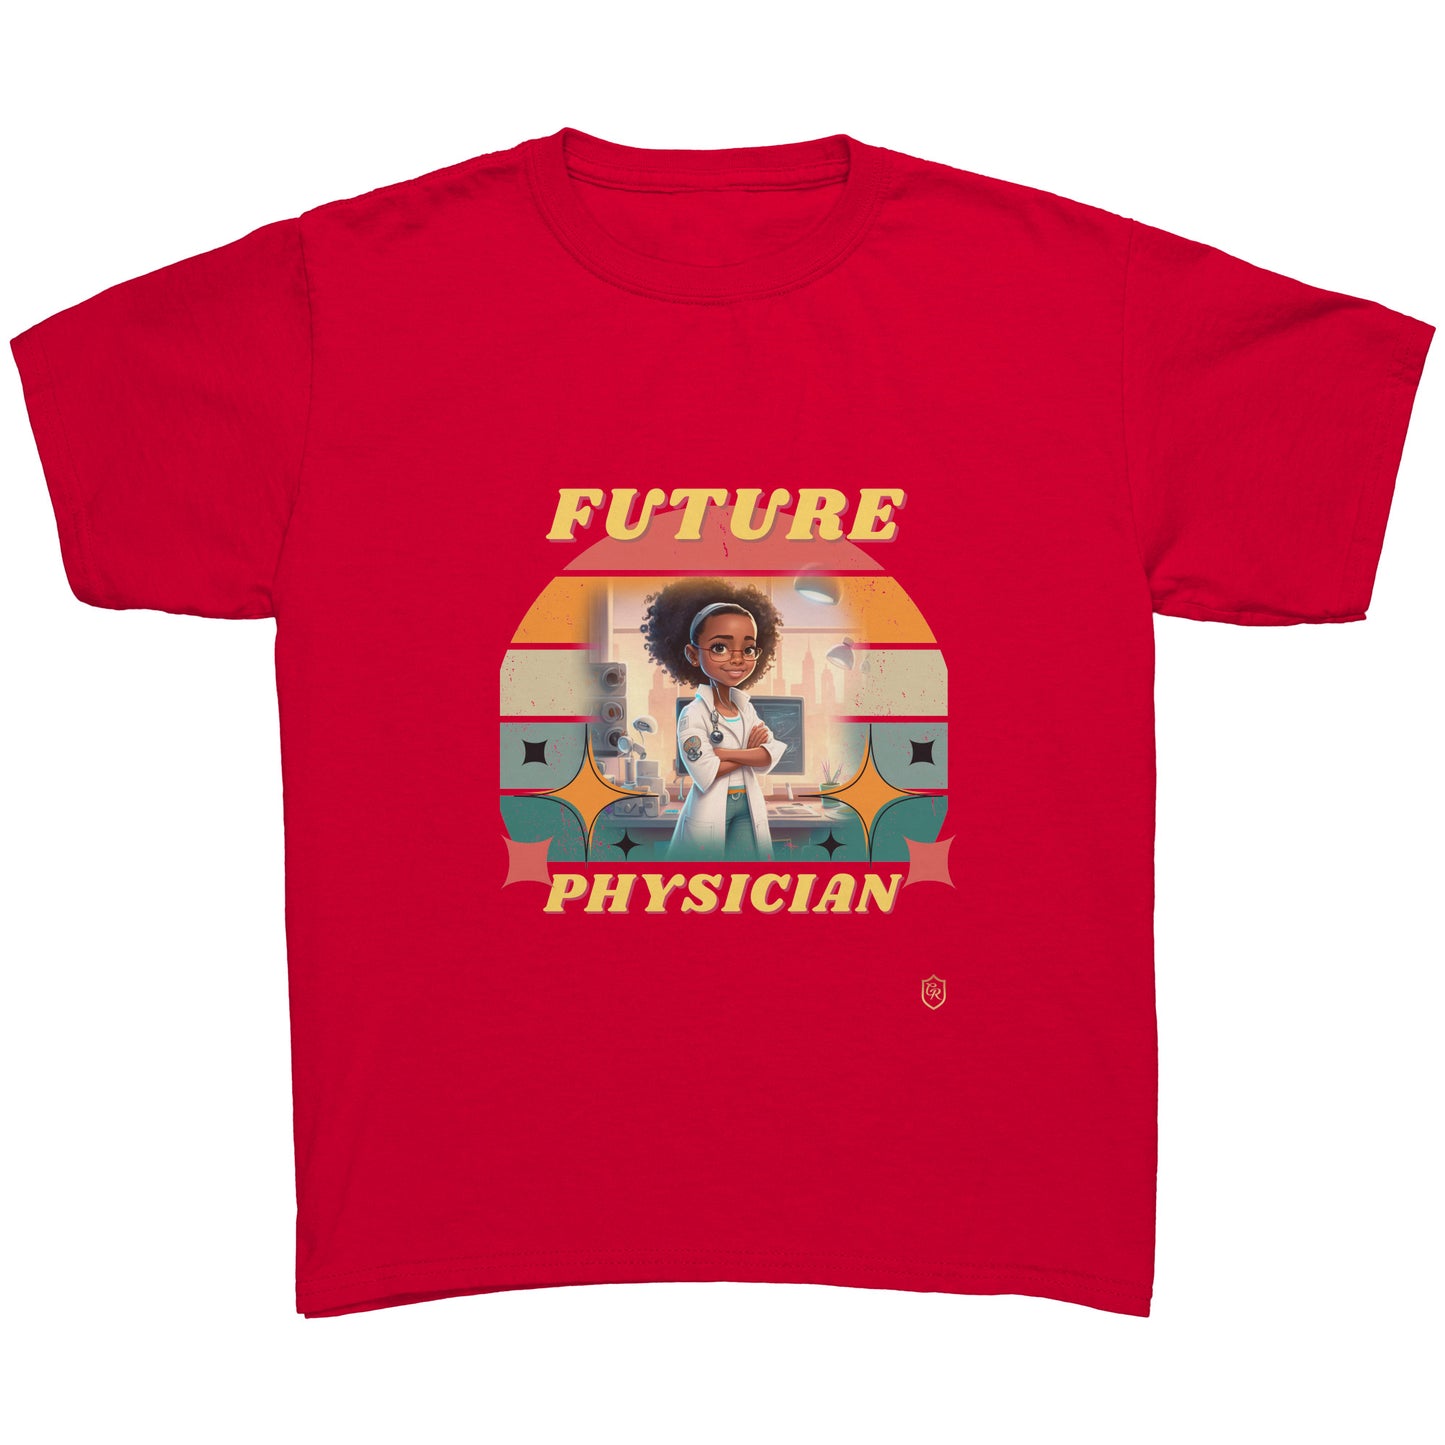 Young Girl's Future Physician T-shirt